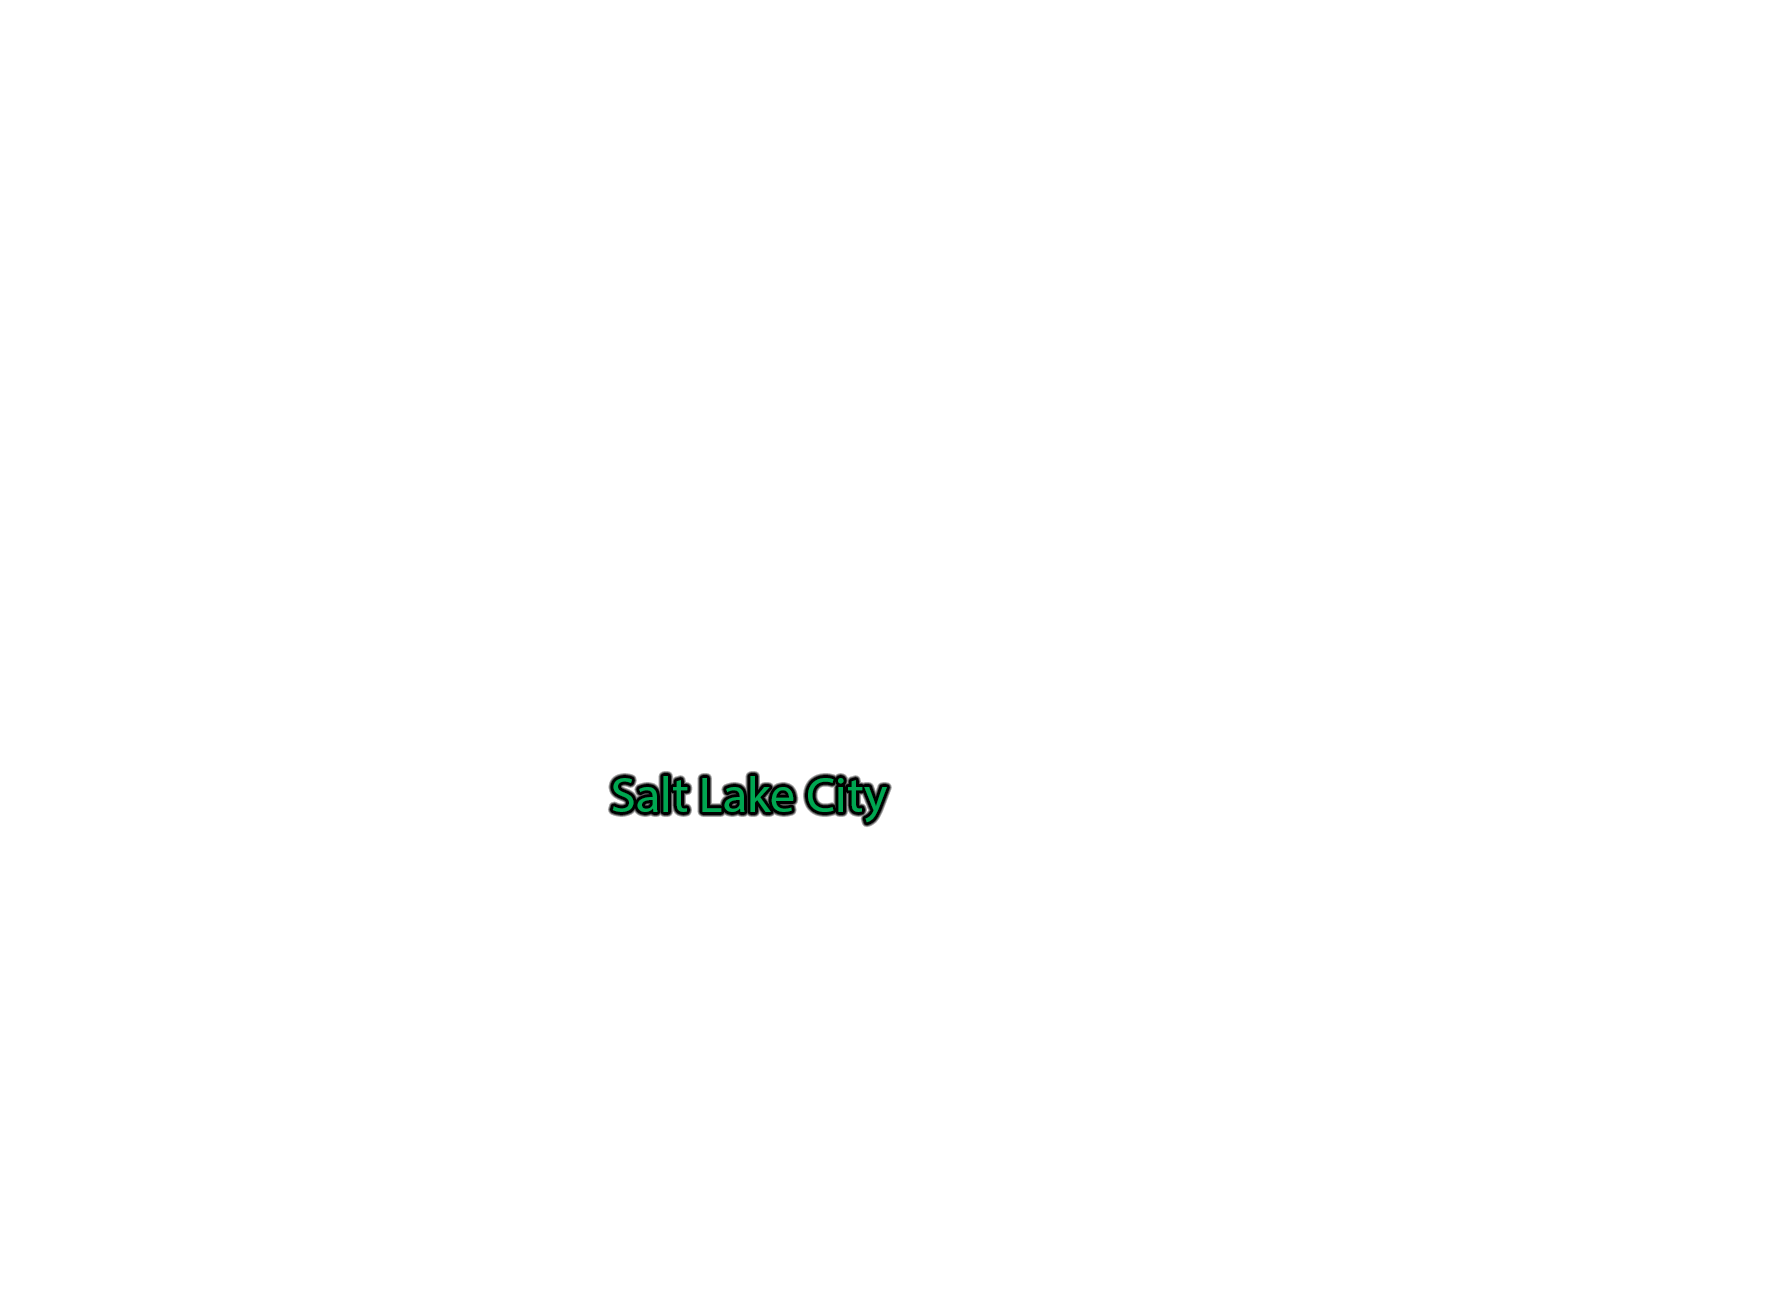 Salt-Lake-City label with glow